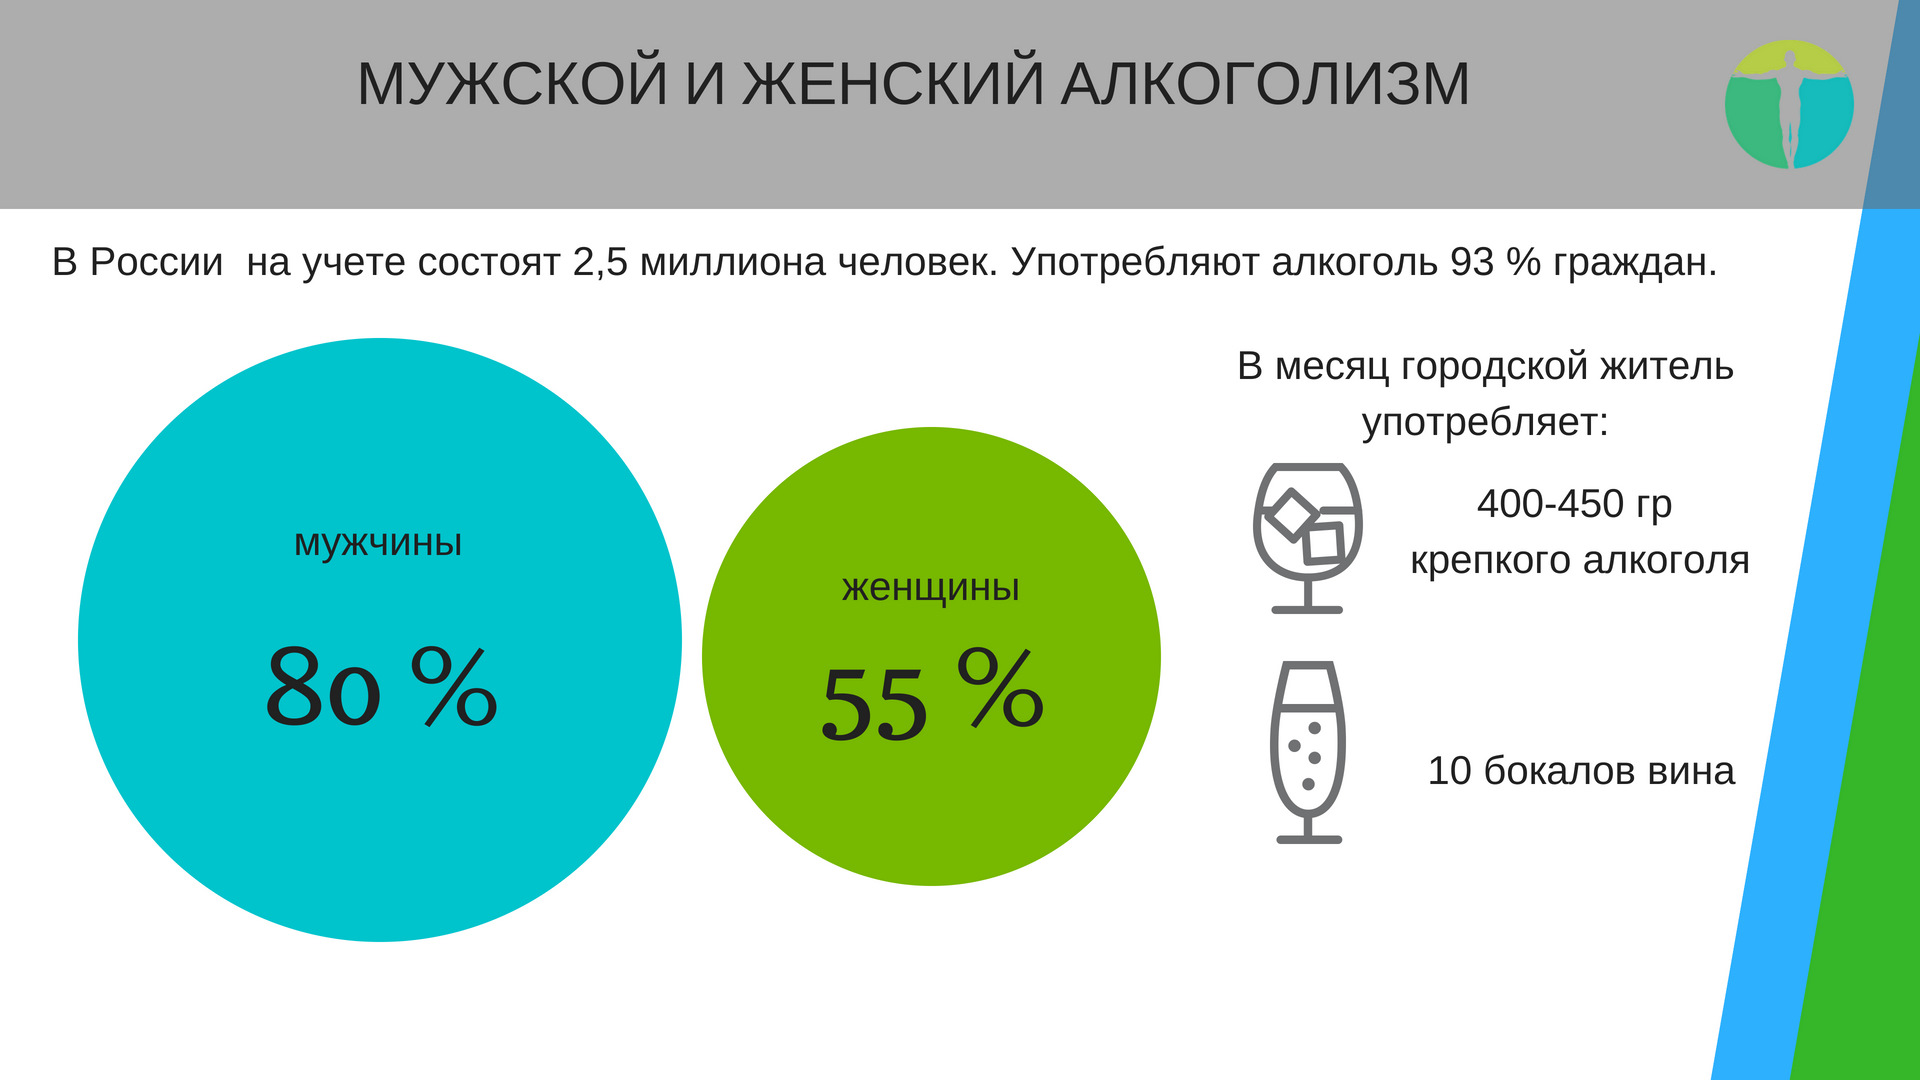 статистика супружеских измен по россии фото 74